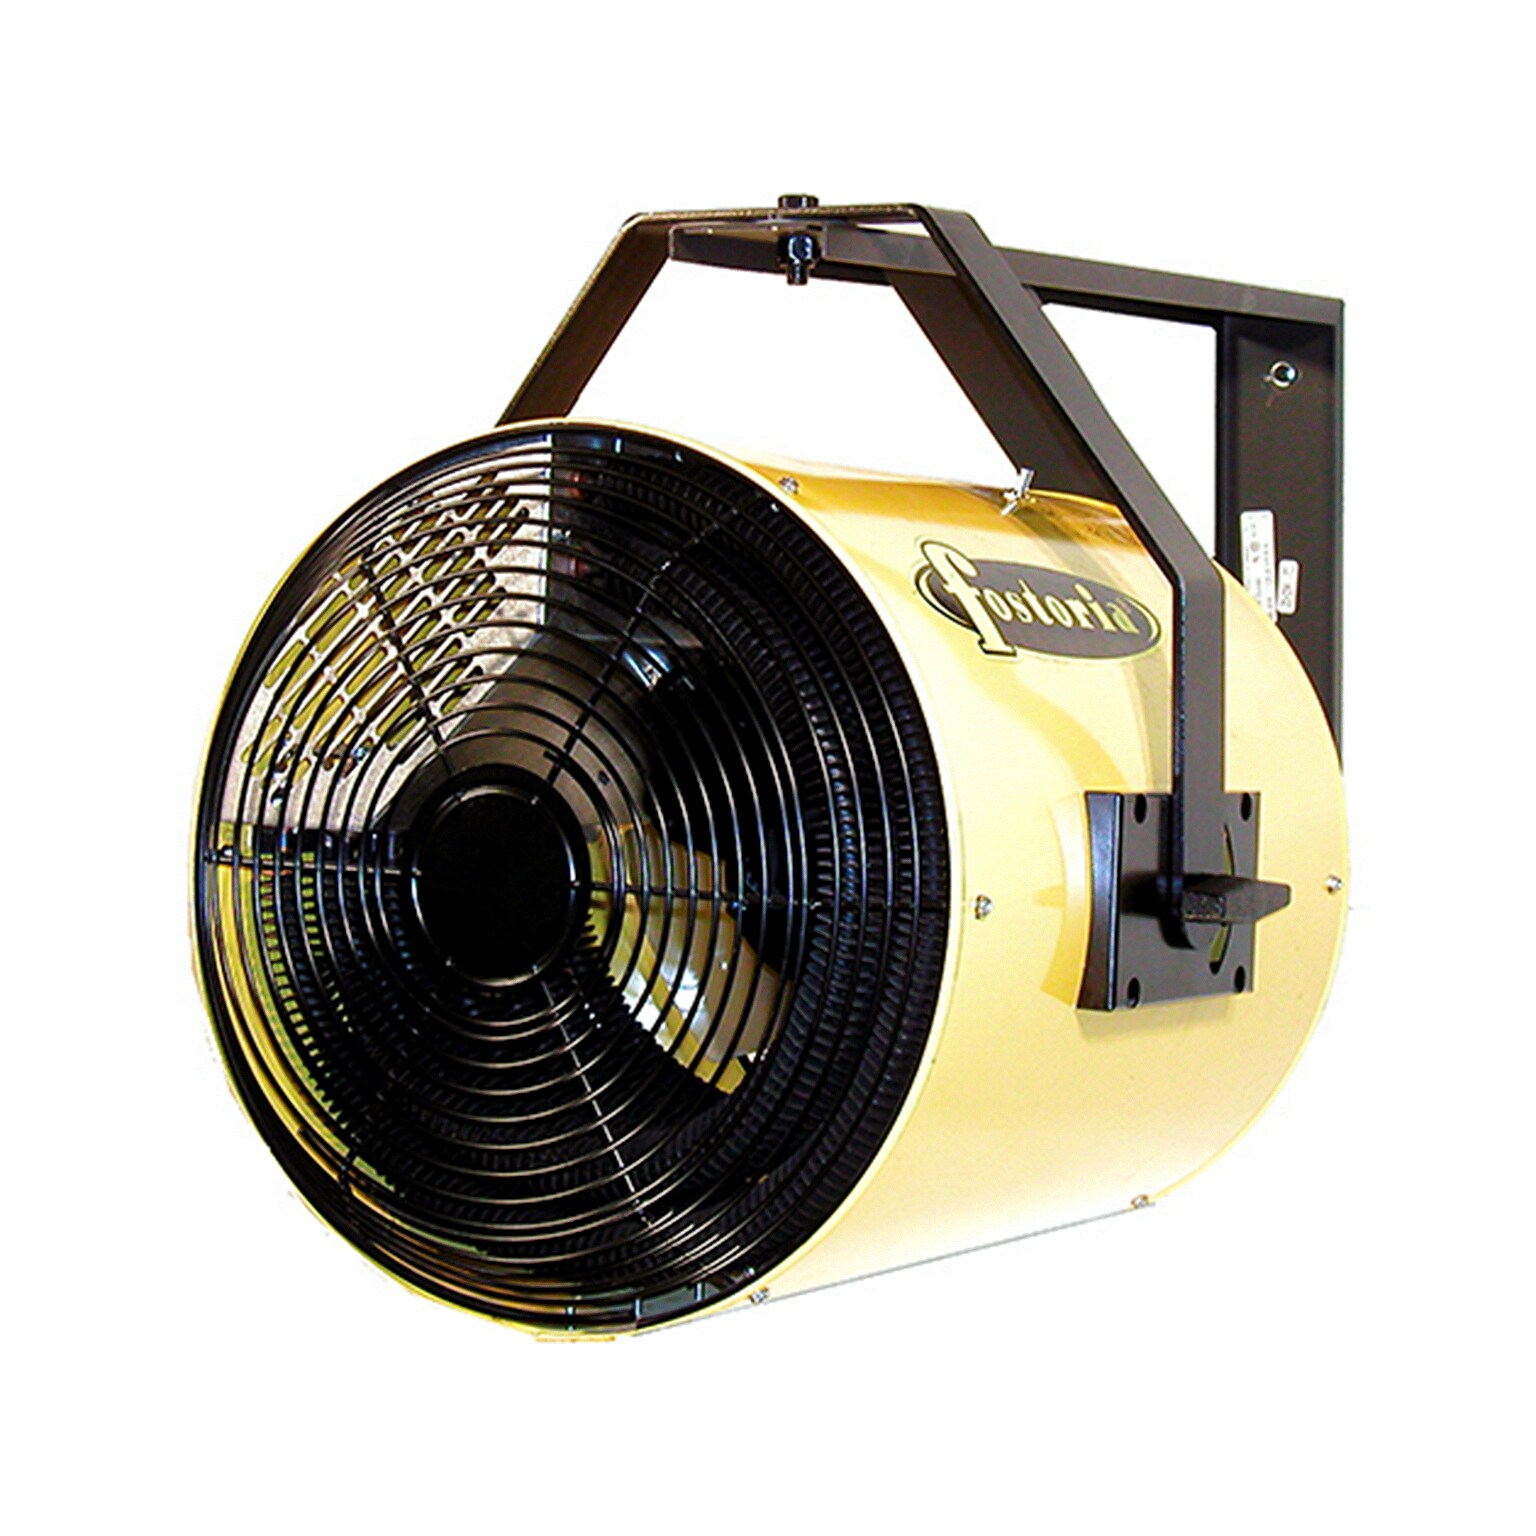 TPI Corporation Fostoria YES 30000-Watt 102390 BTU Electric Heater, Yellow/Black (08861310)